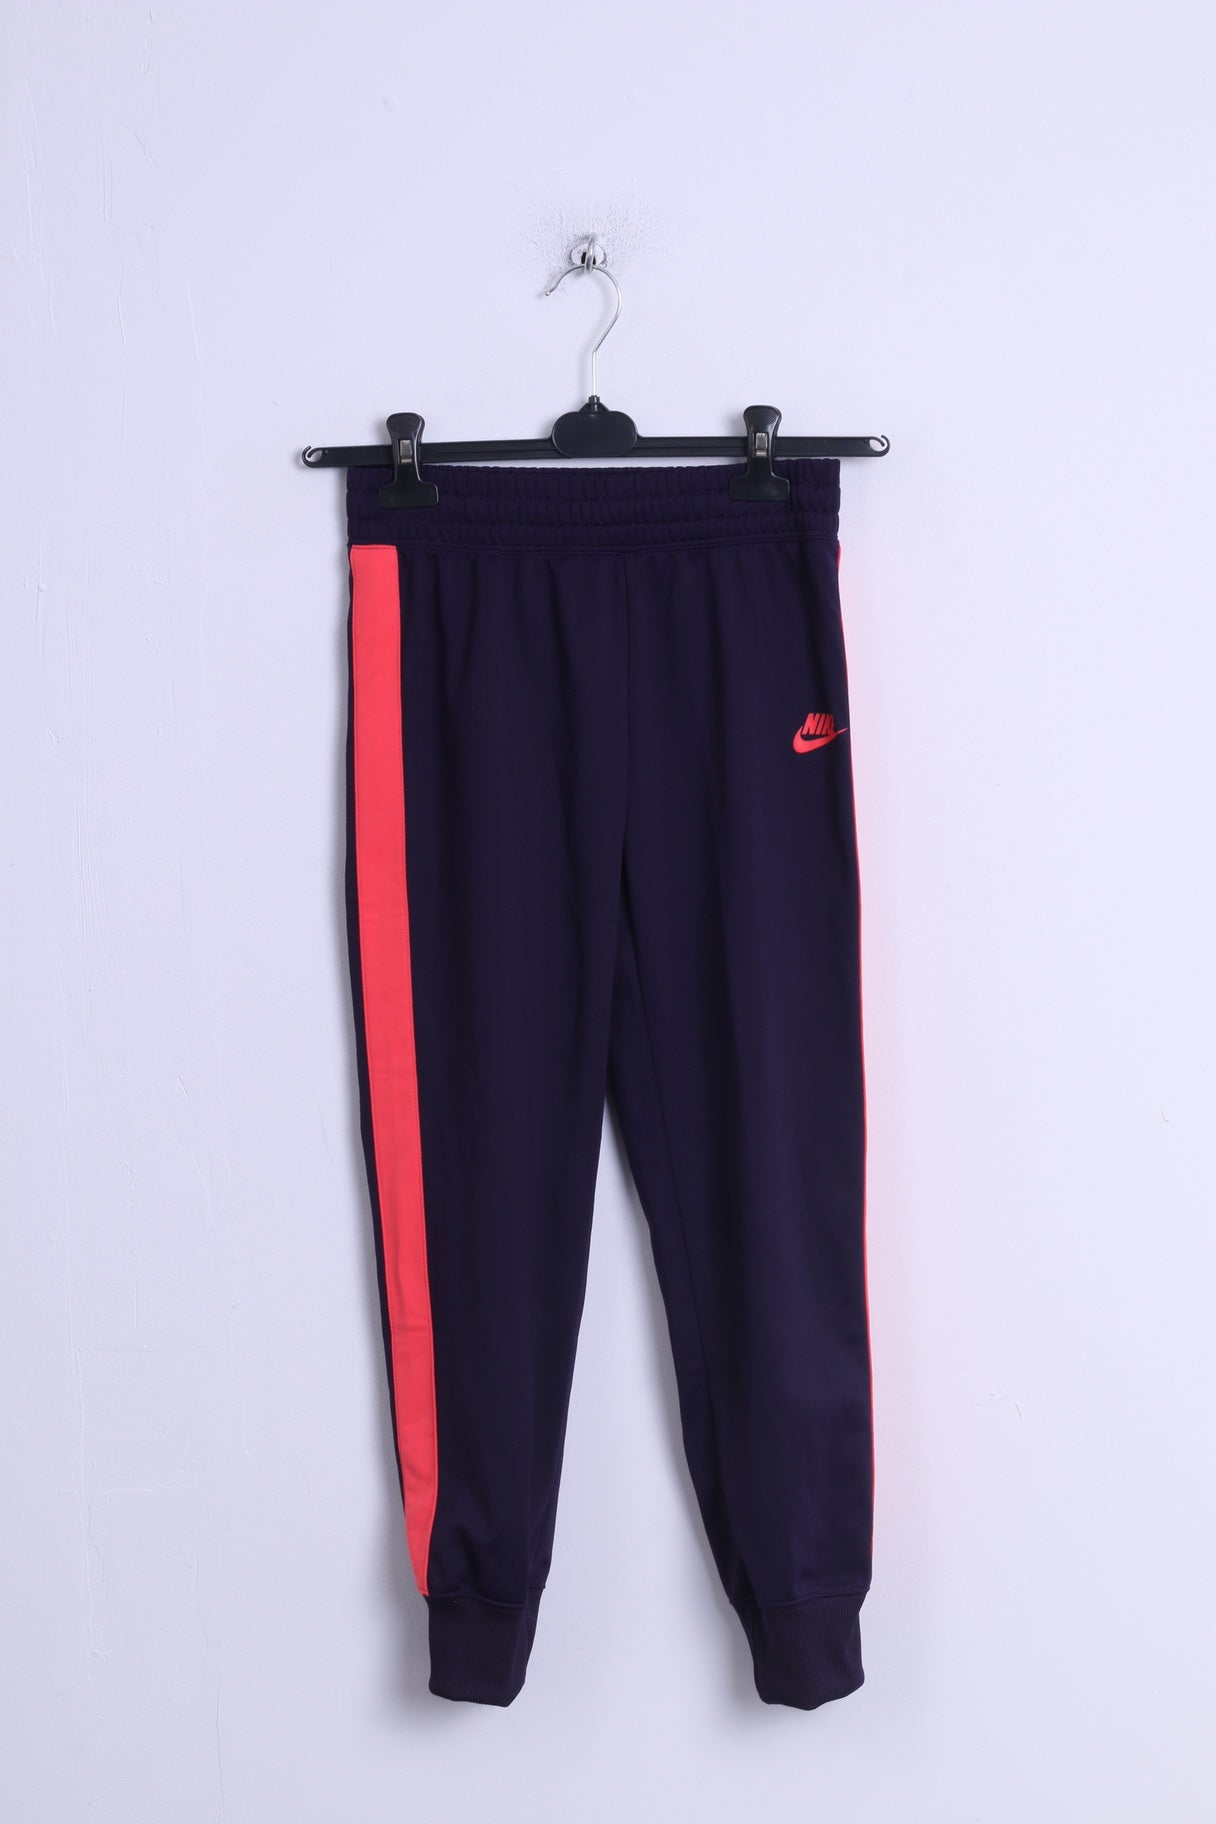 Pantaloni sportivi Nike Bambina 137-146 cm 10-12 anni Viola Lucido Sport Palestra